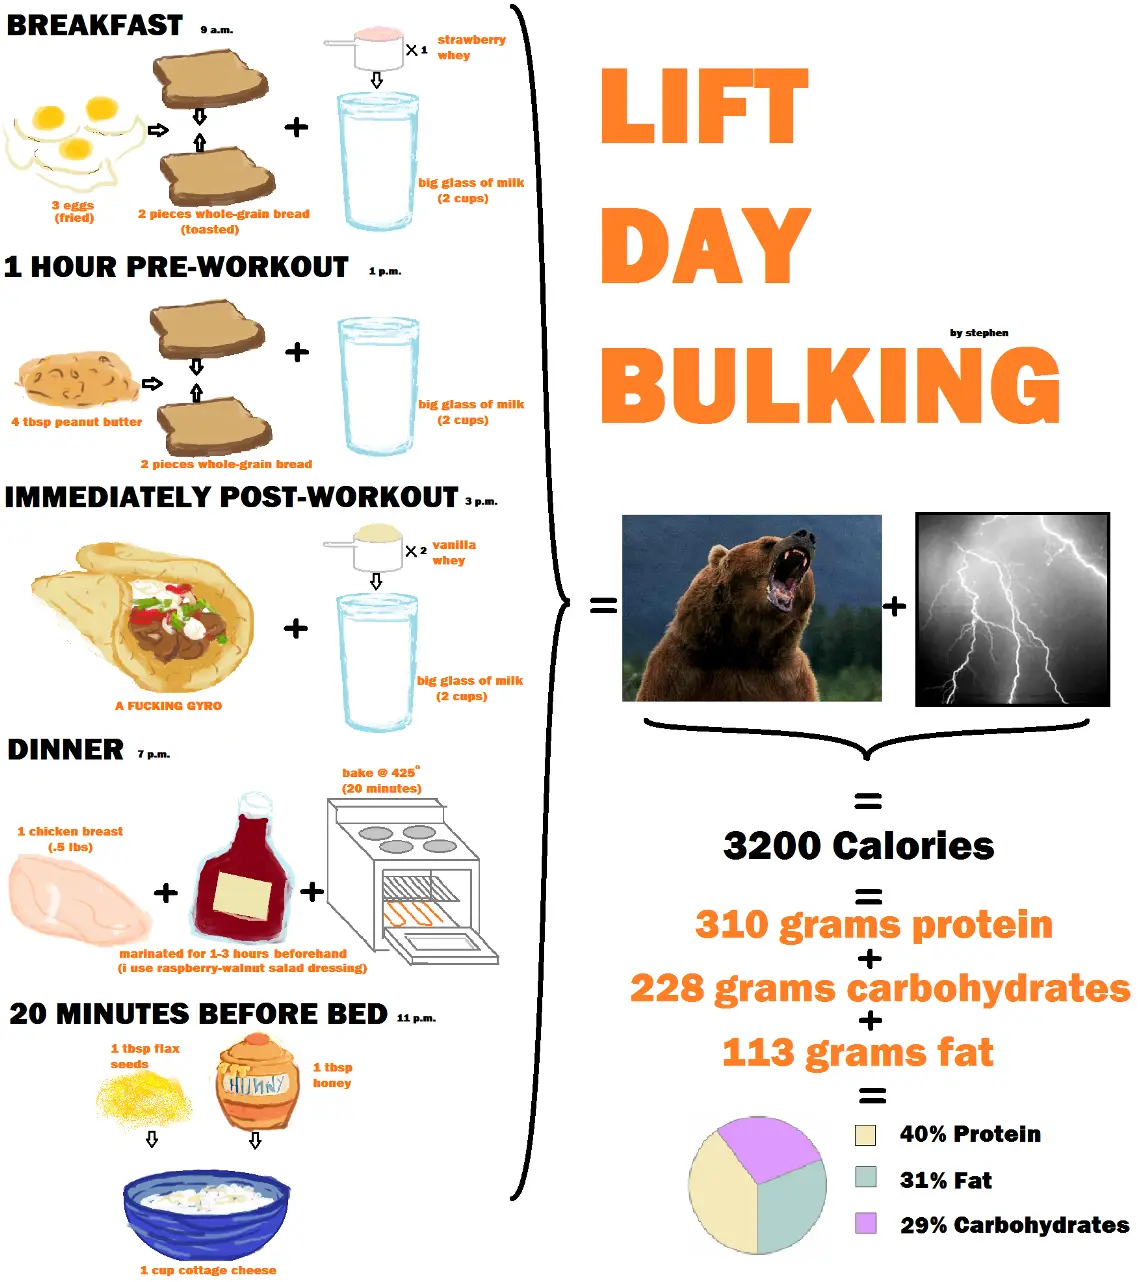 /fit/ recipe - Lift Day Bulking